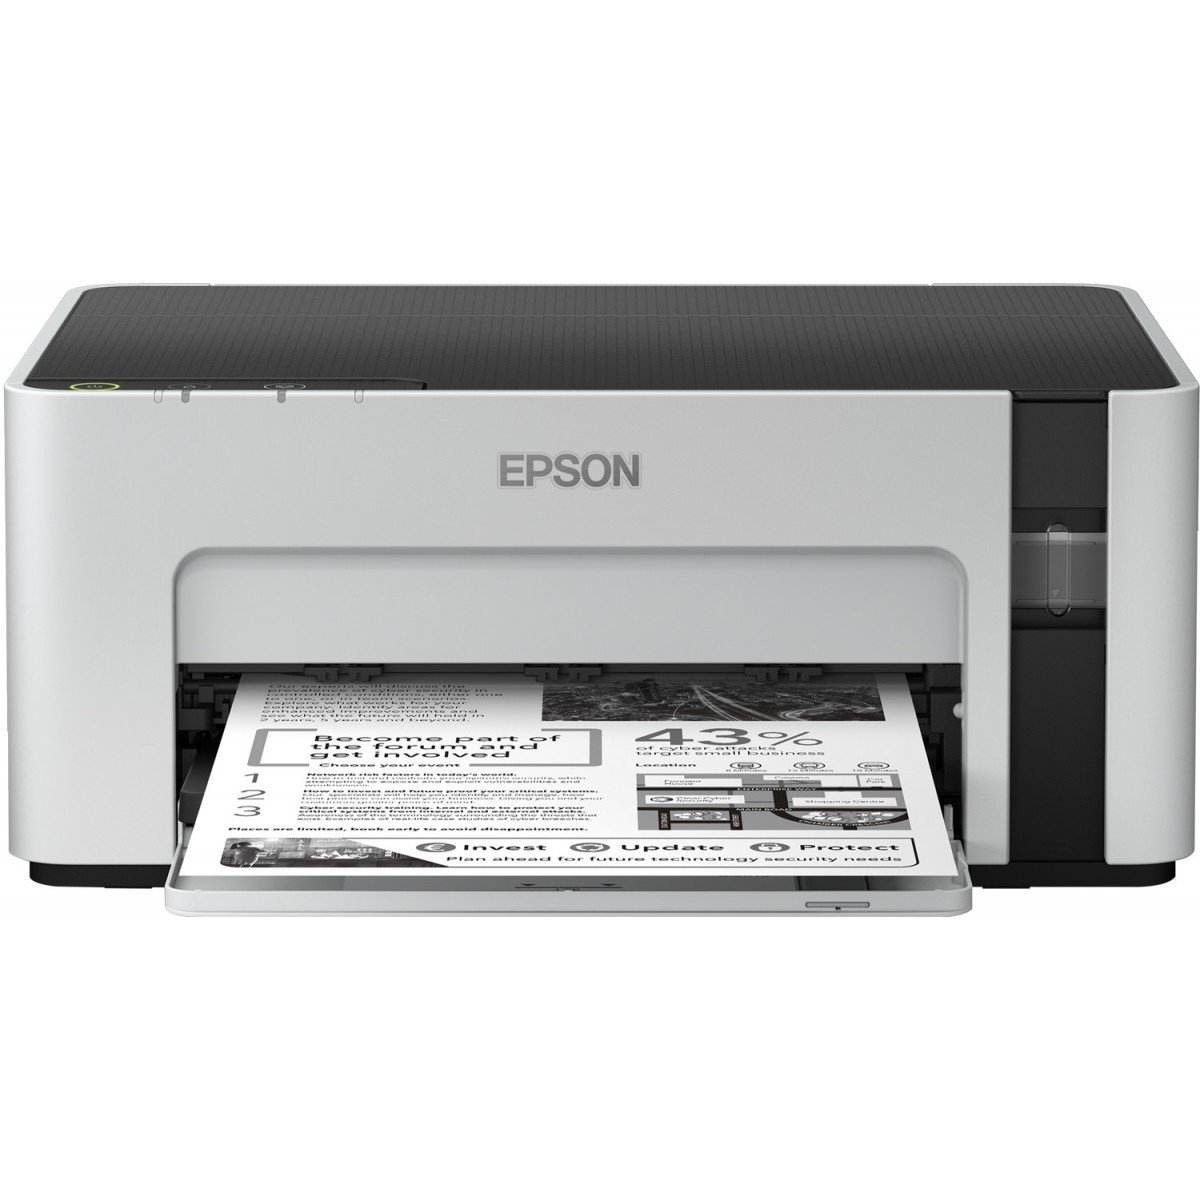 Epson EcoTank M1100 - 1440 x 720 DPI - 1 - A4 - 15000 pages per month - 32 ppm - Black - White